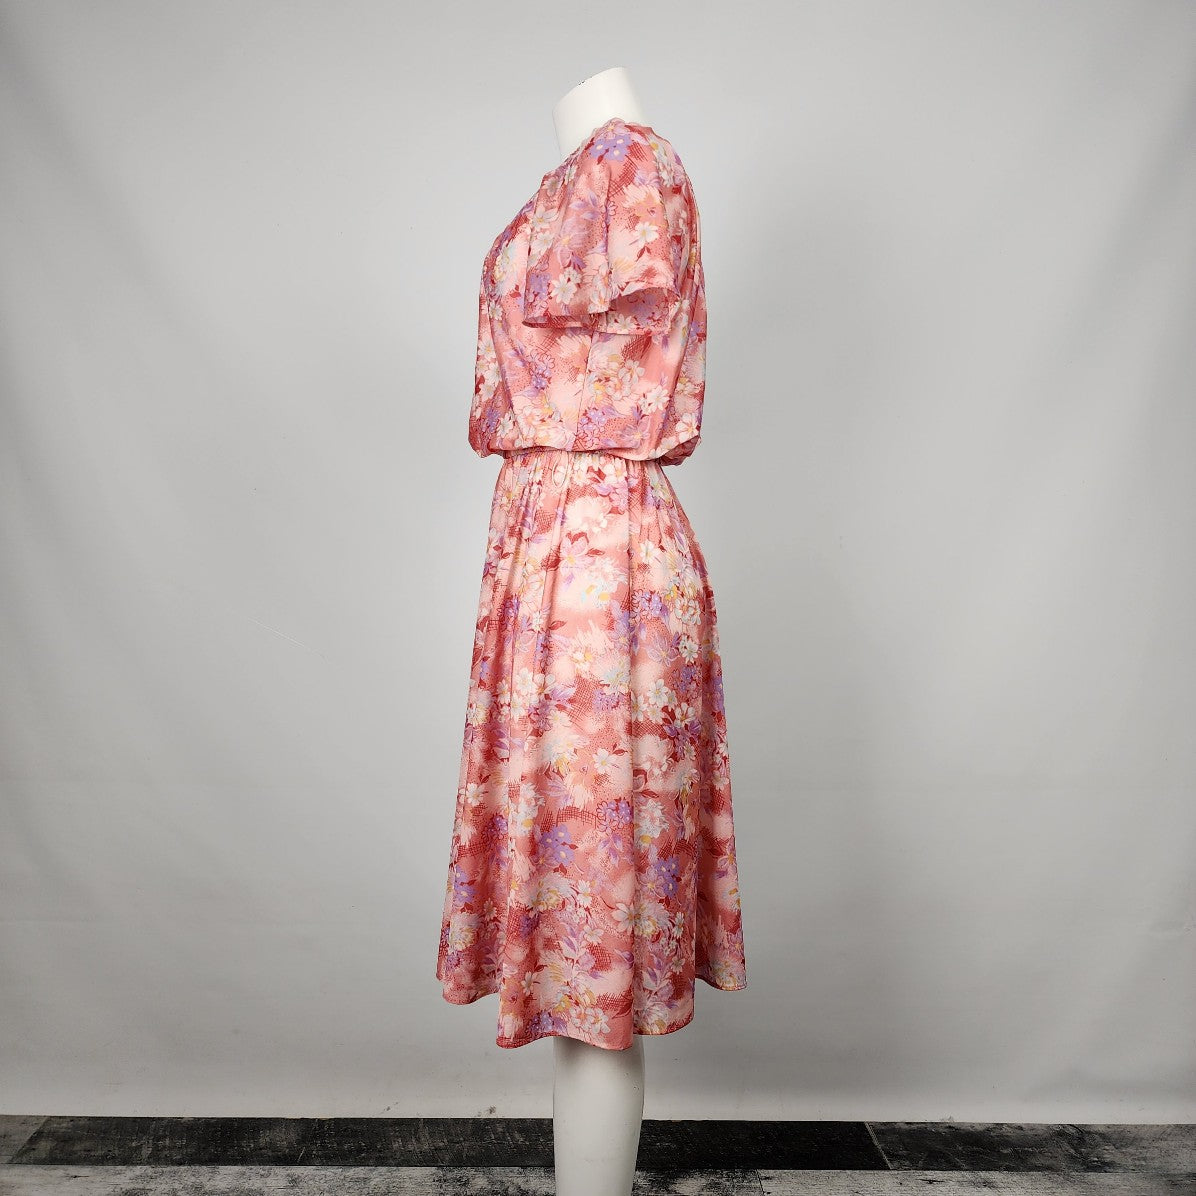 Vintage Pink Floral Print Blouson Dress Size S